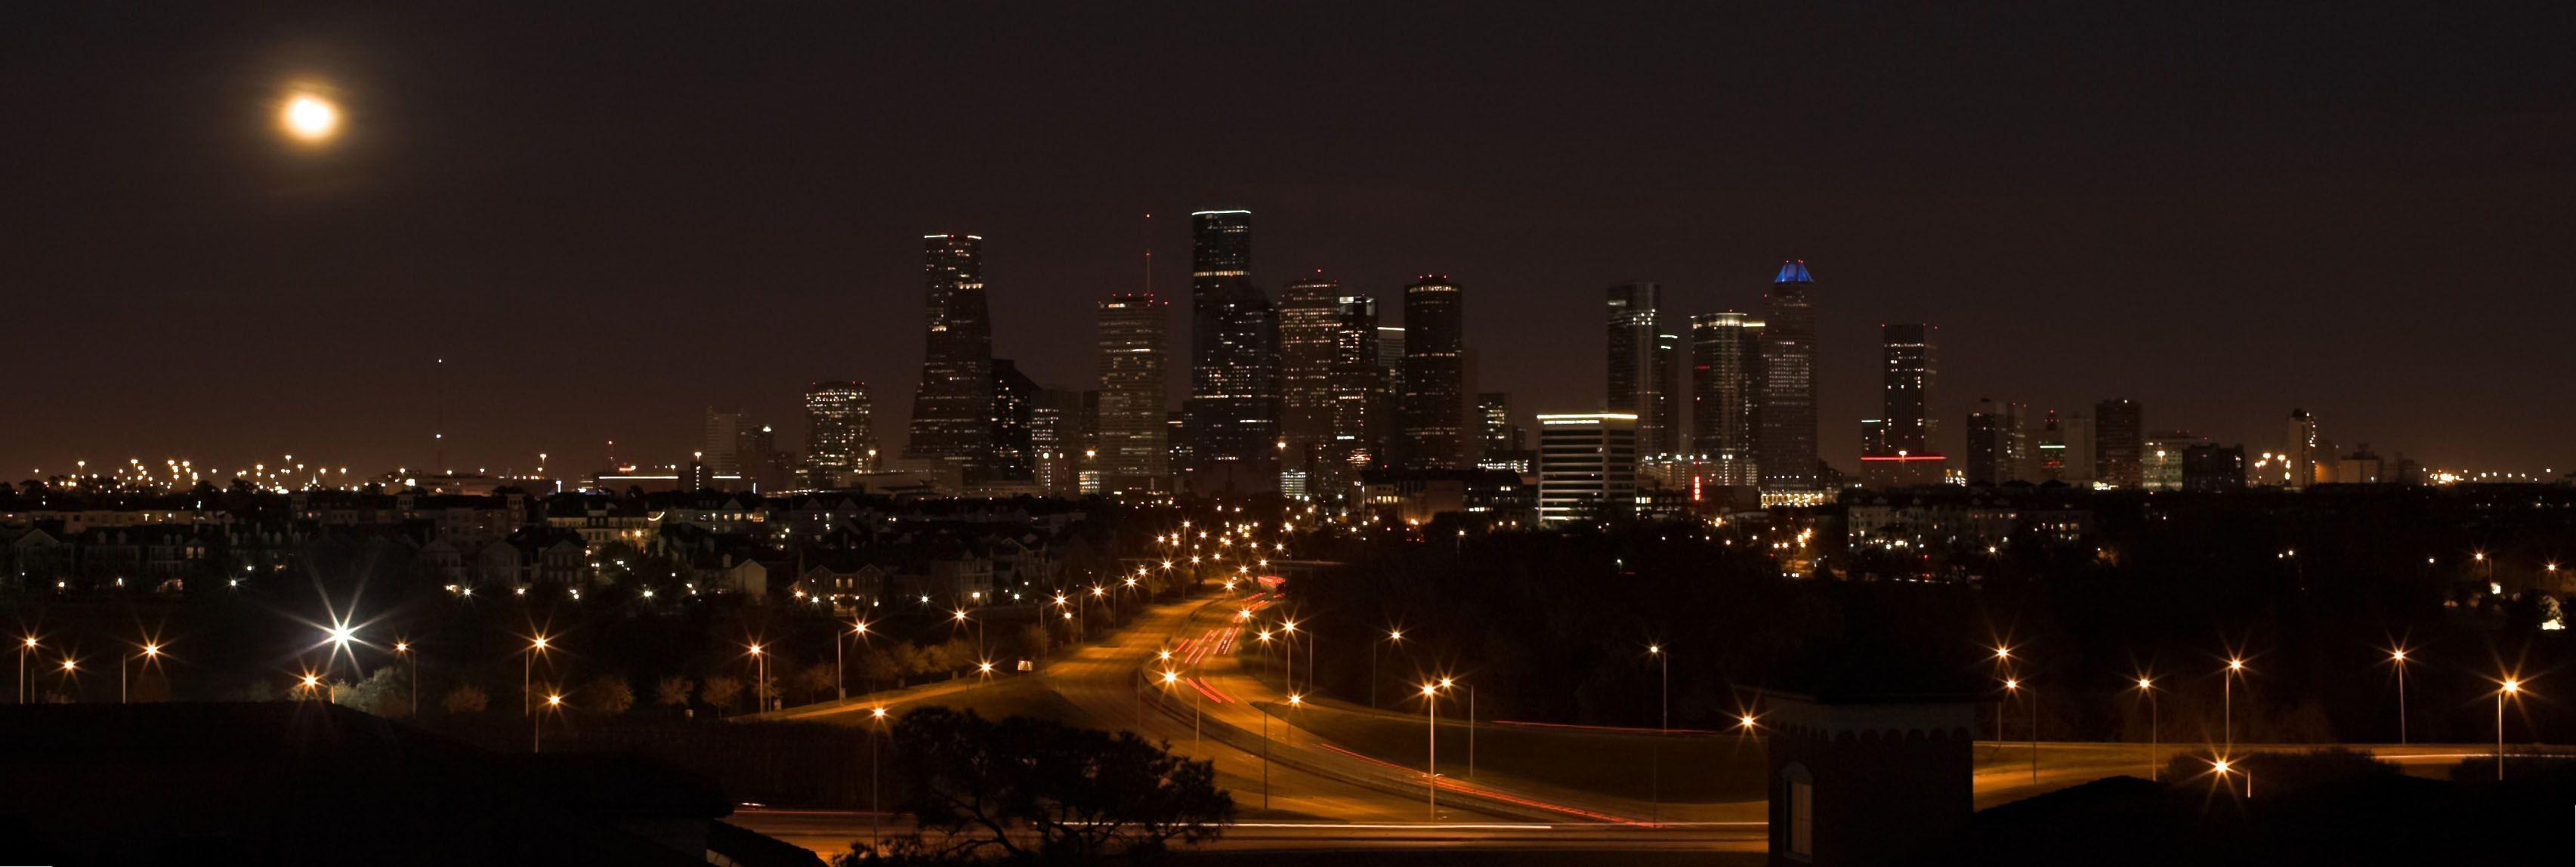 Houston Skyline At Night Wallpaper